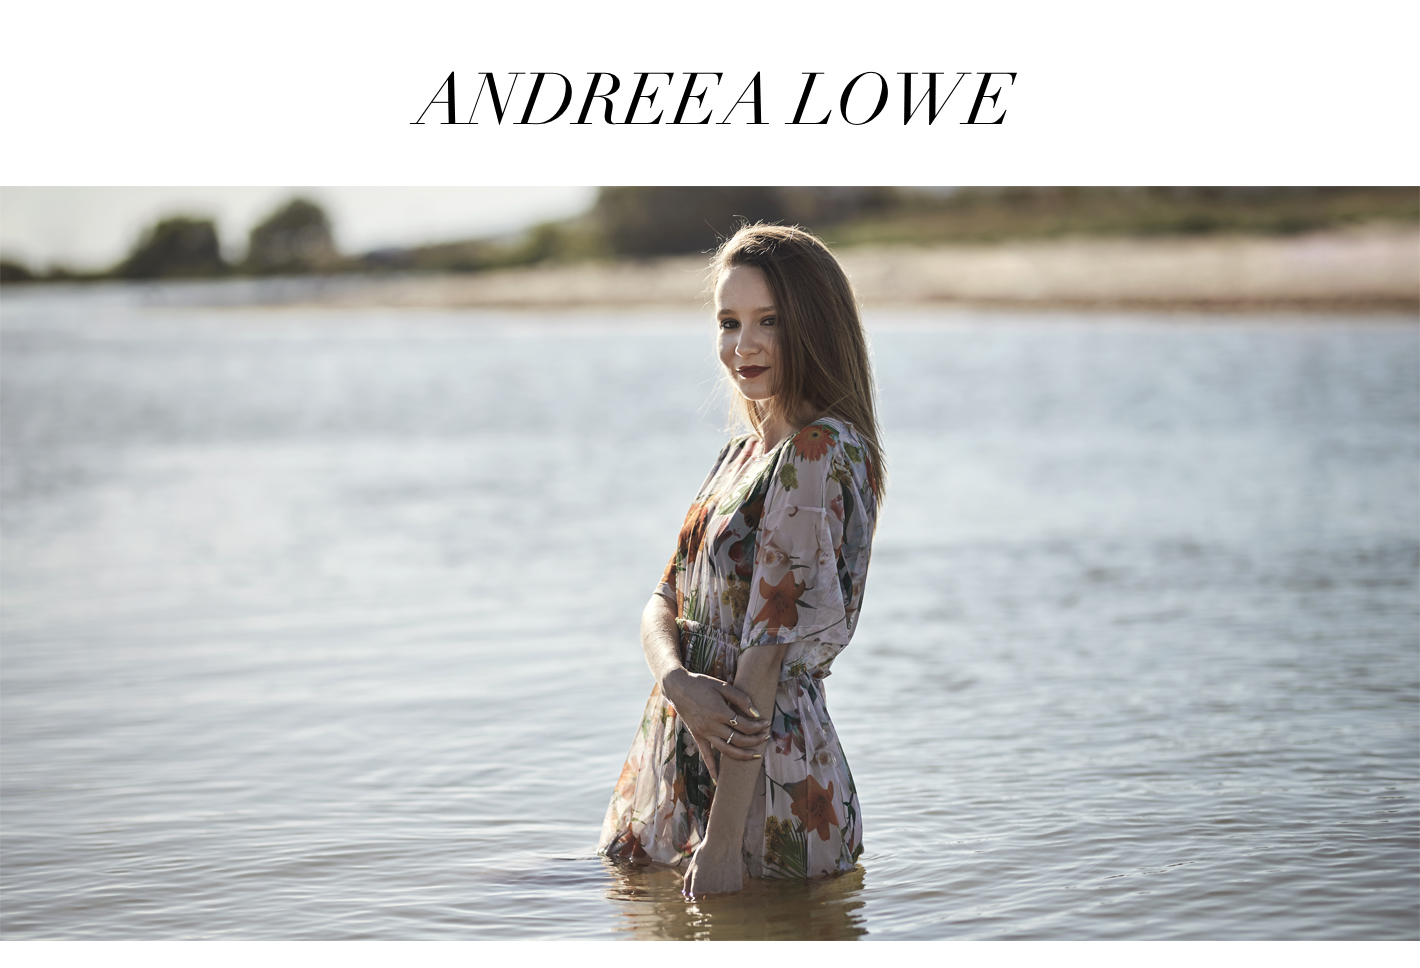 Andreea Lowe